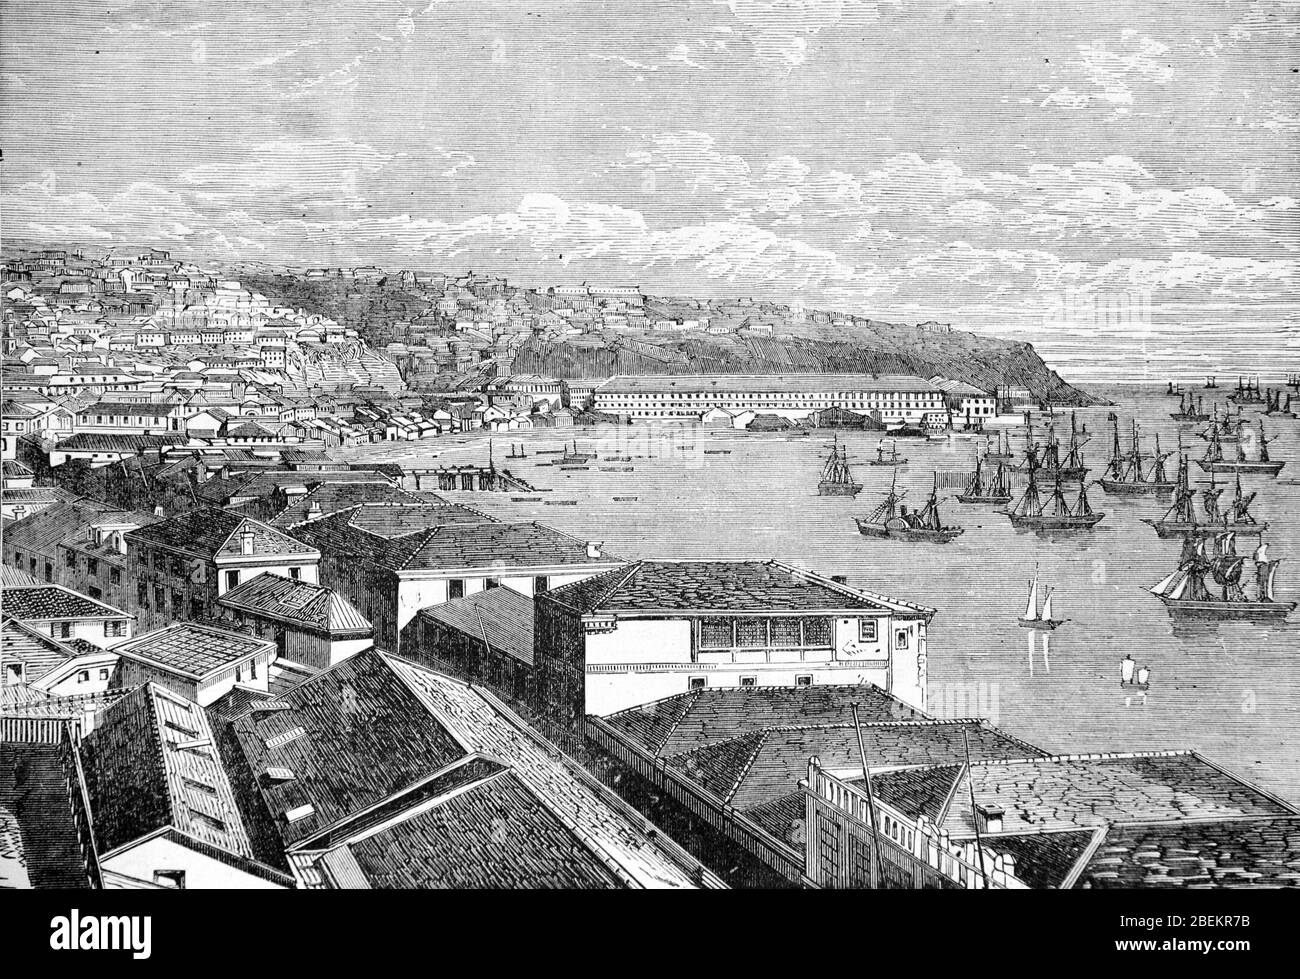 Vista sul porto o porto di Valparaiso Cile nel tardo XIX secolo. Vintage o Old Illustration o Engraving 1887 Foto Stock